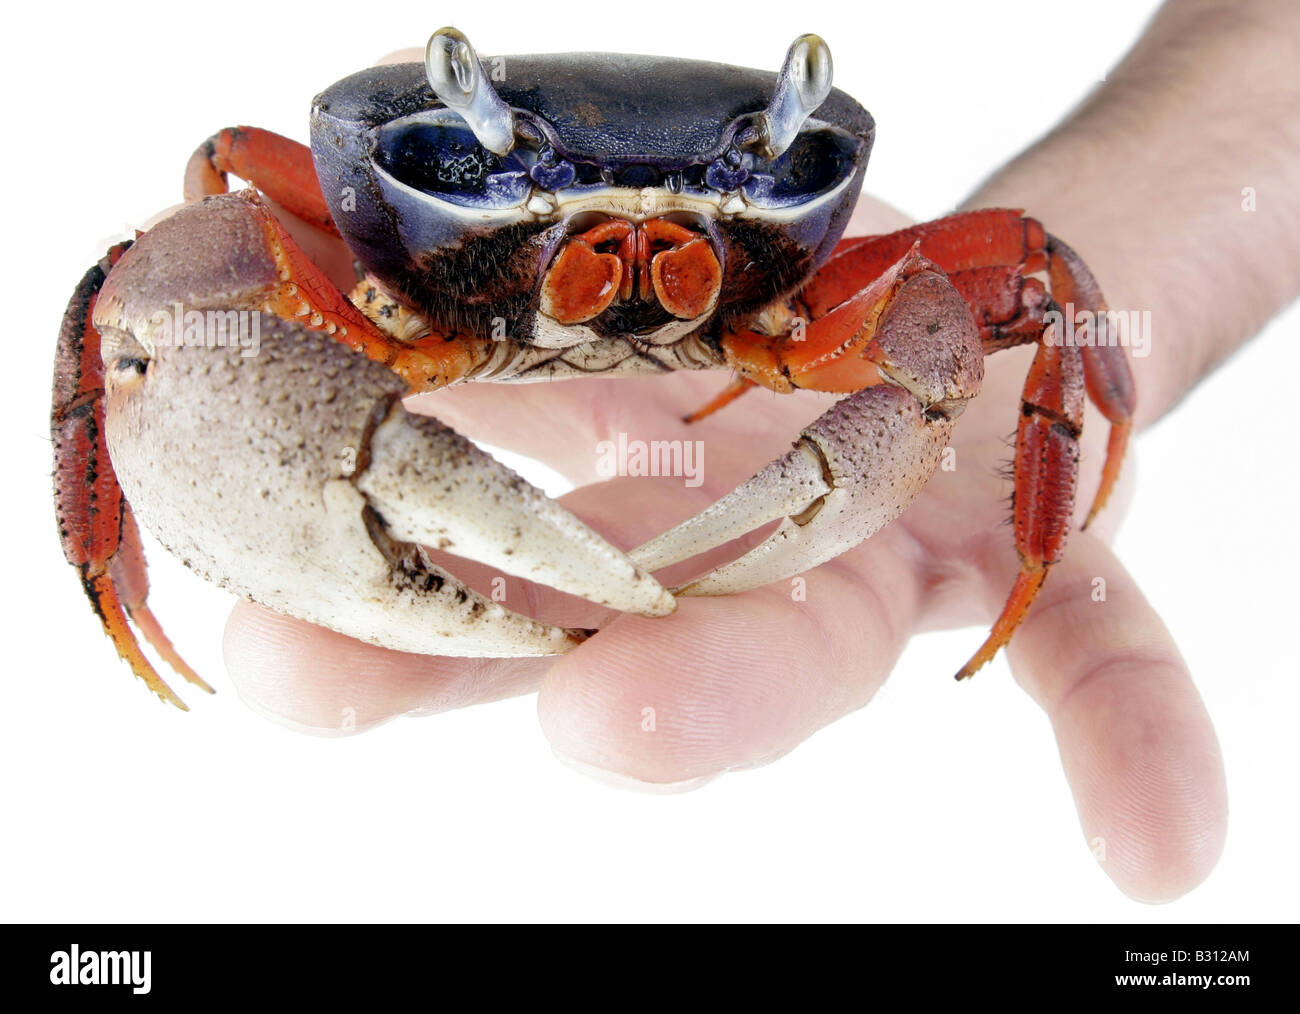 Cardisoma armatum, rainbow crab, West African rainbow crab Stock Photo